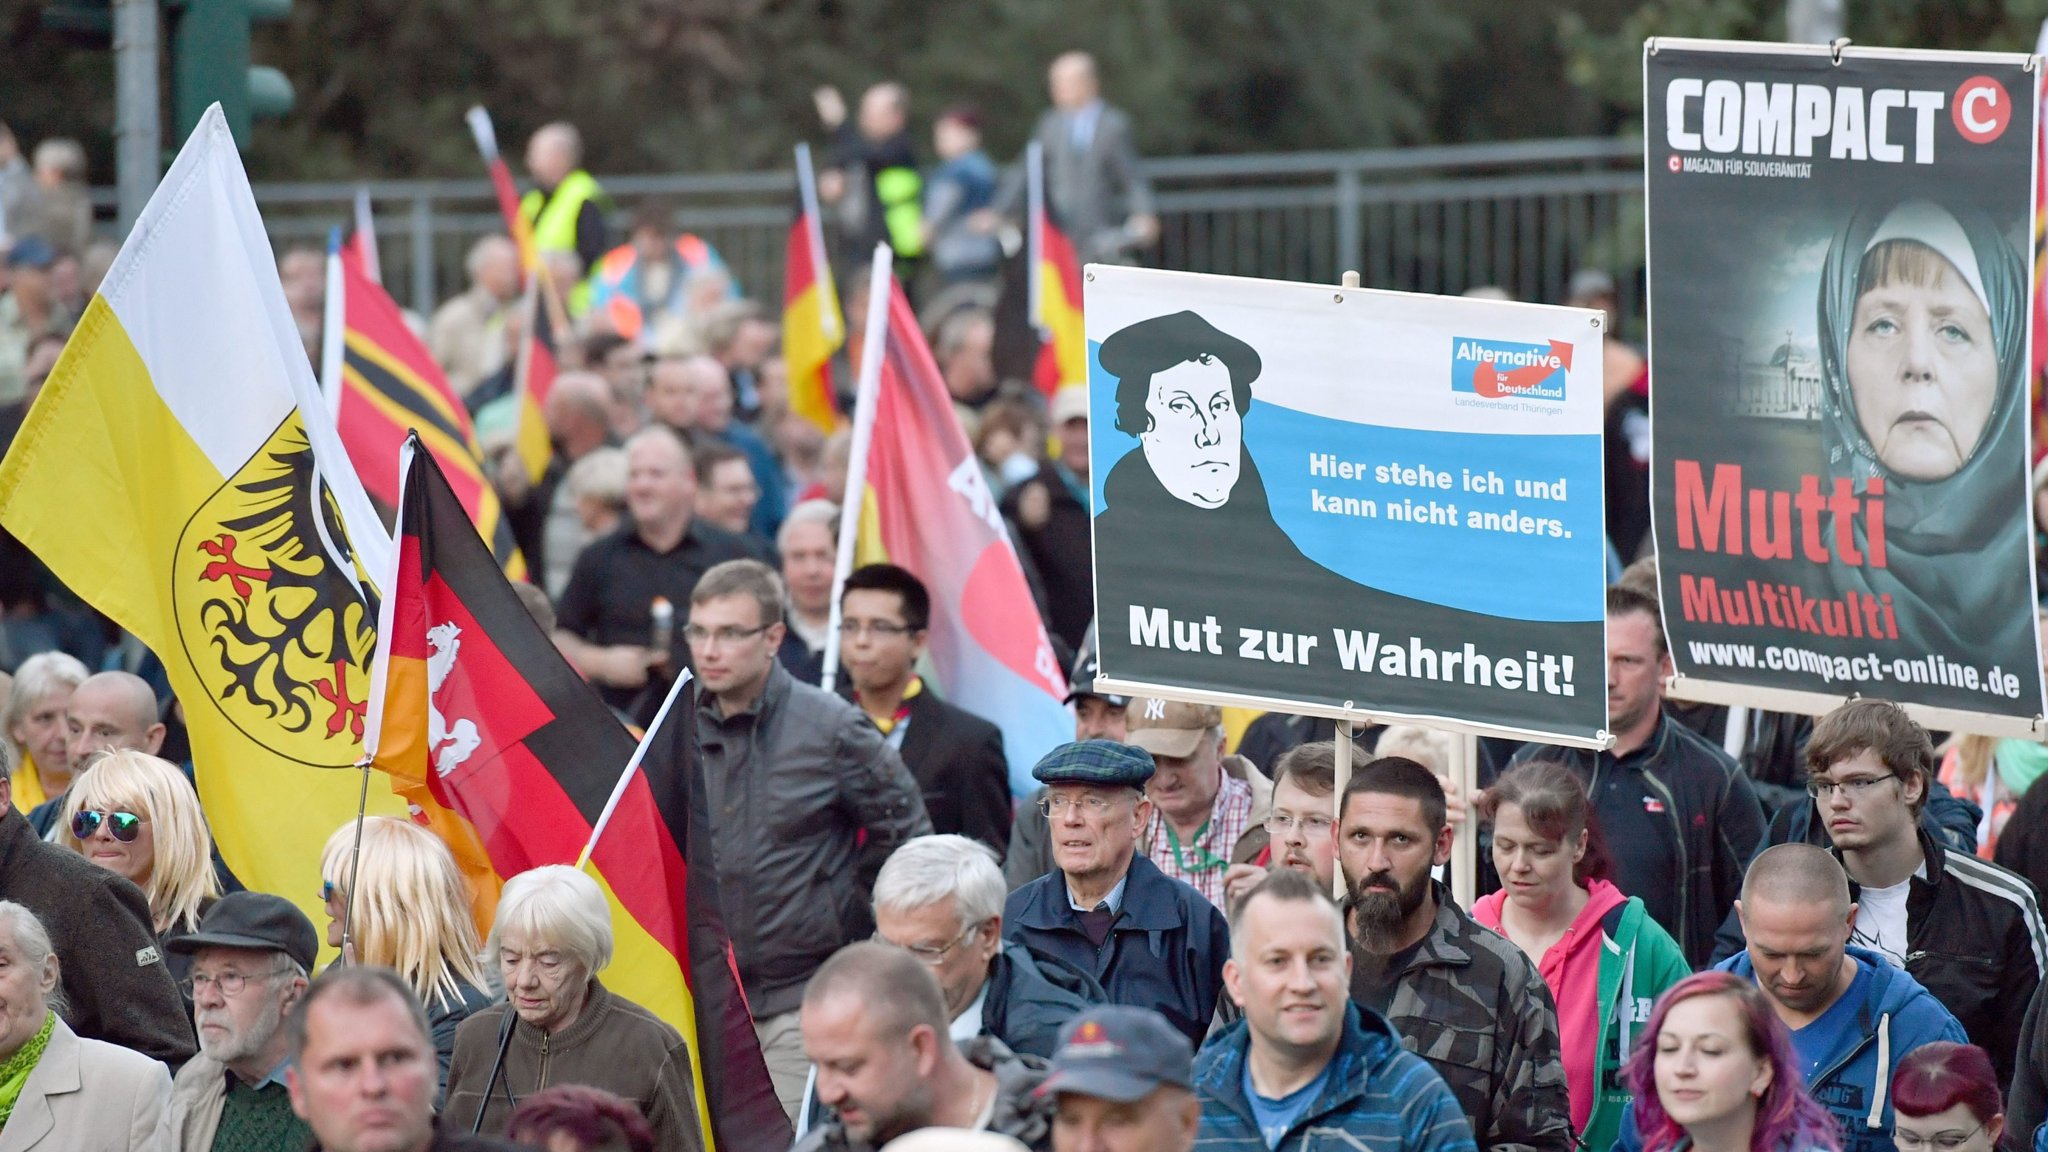 AfD demonstration in Erfurt